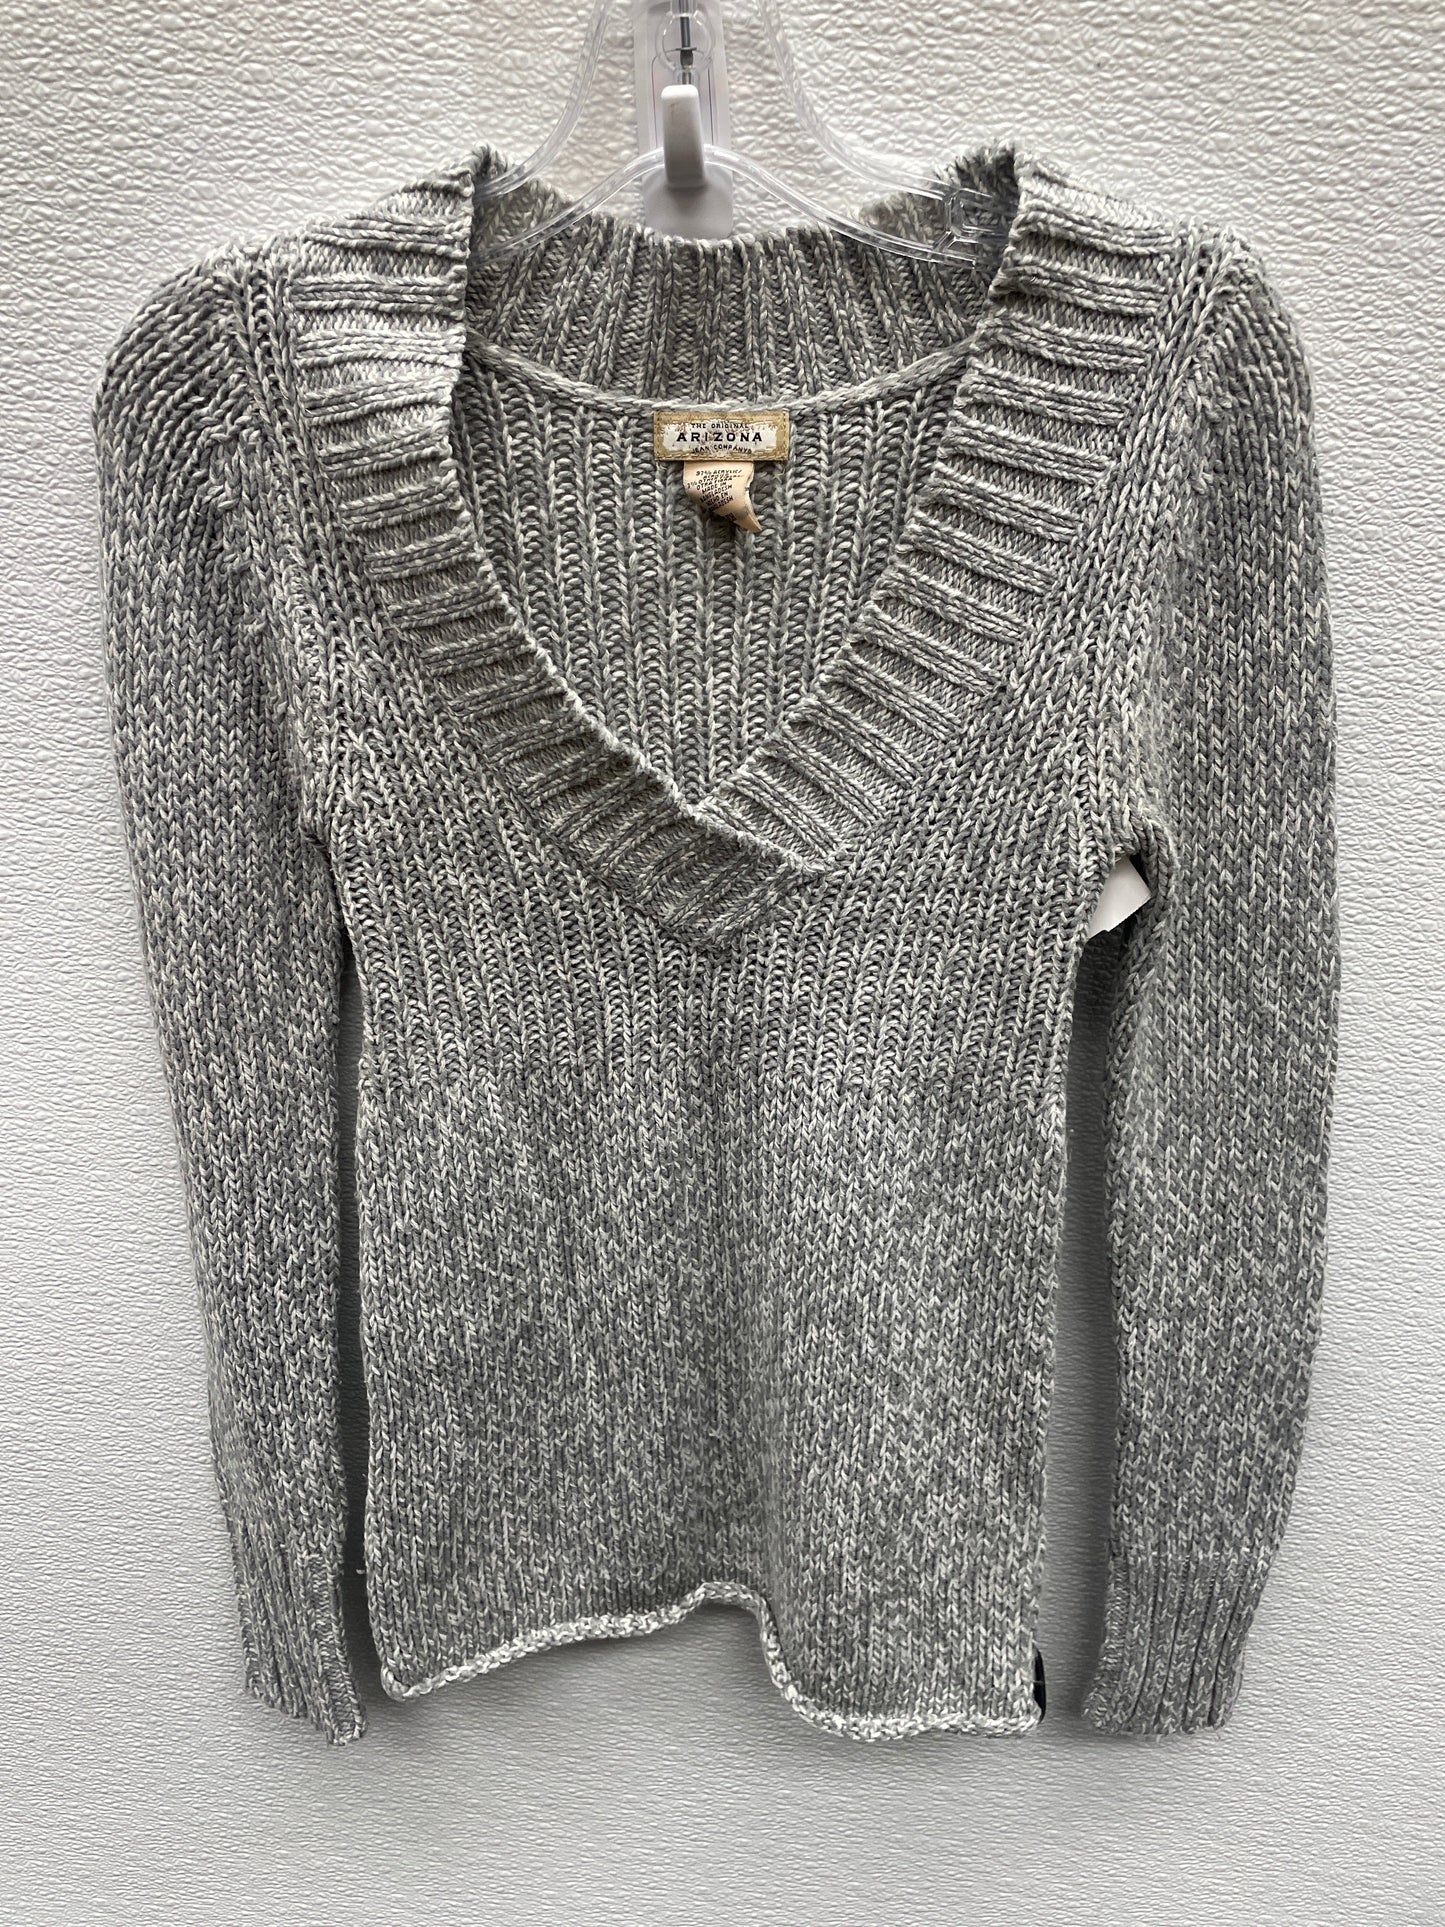 Sweater By Arizona  Size: S